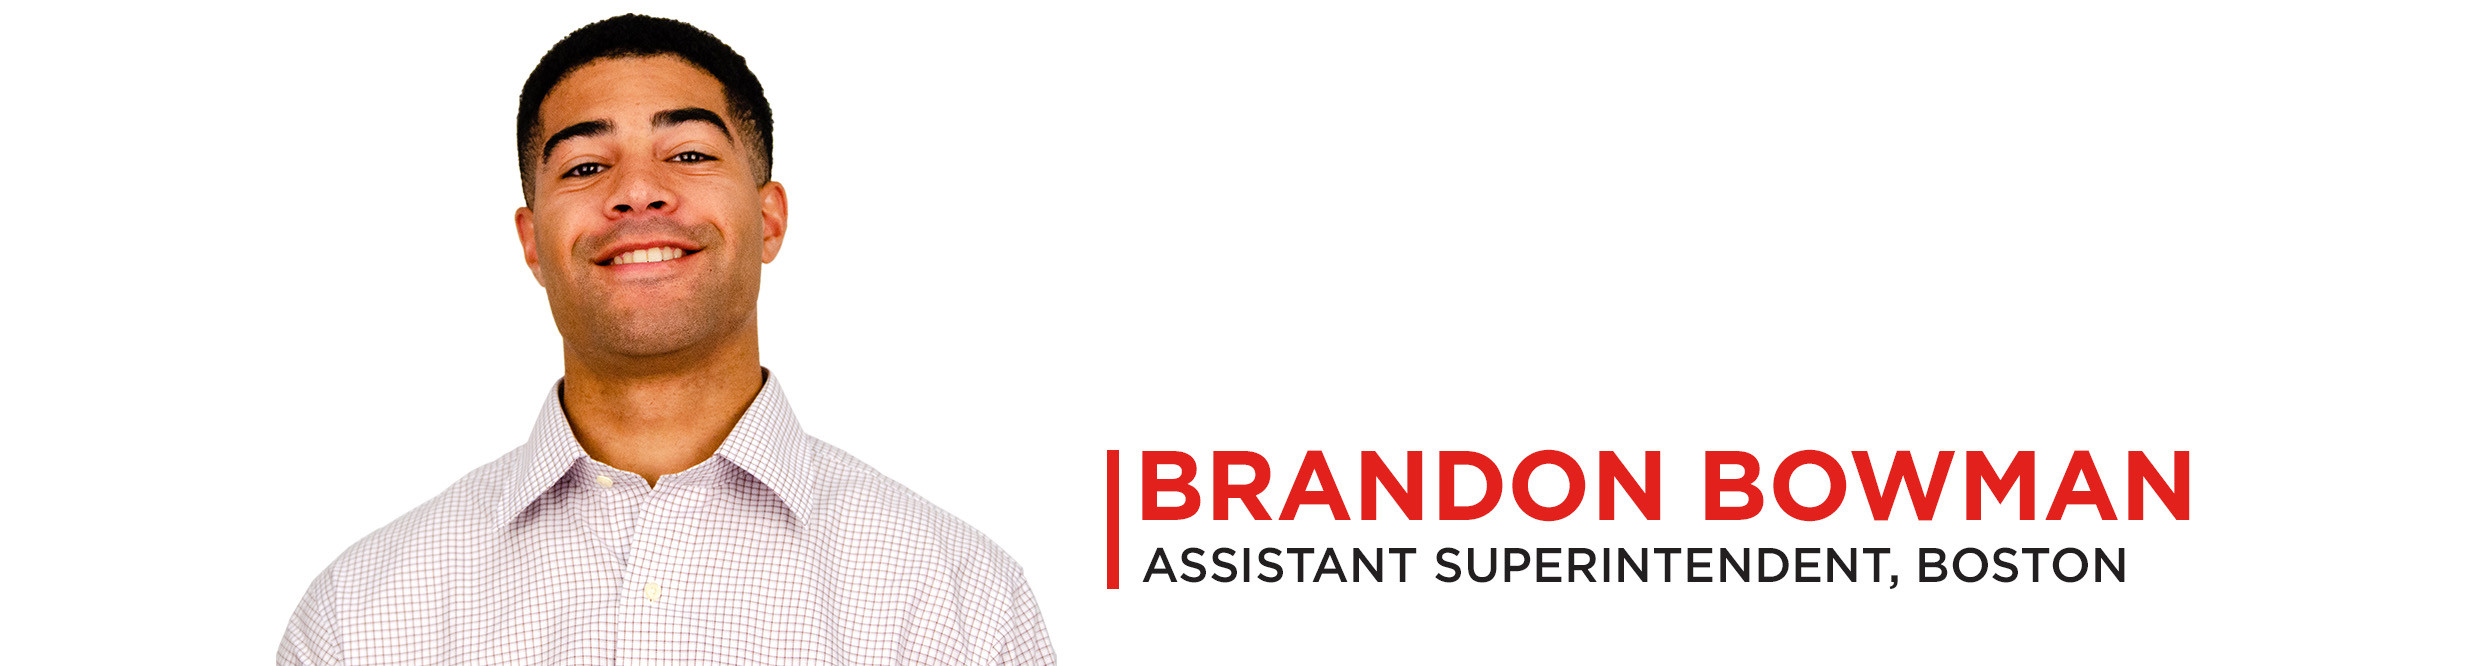 Brandon Bowman - Assistant Superintendent, Boston